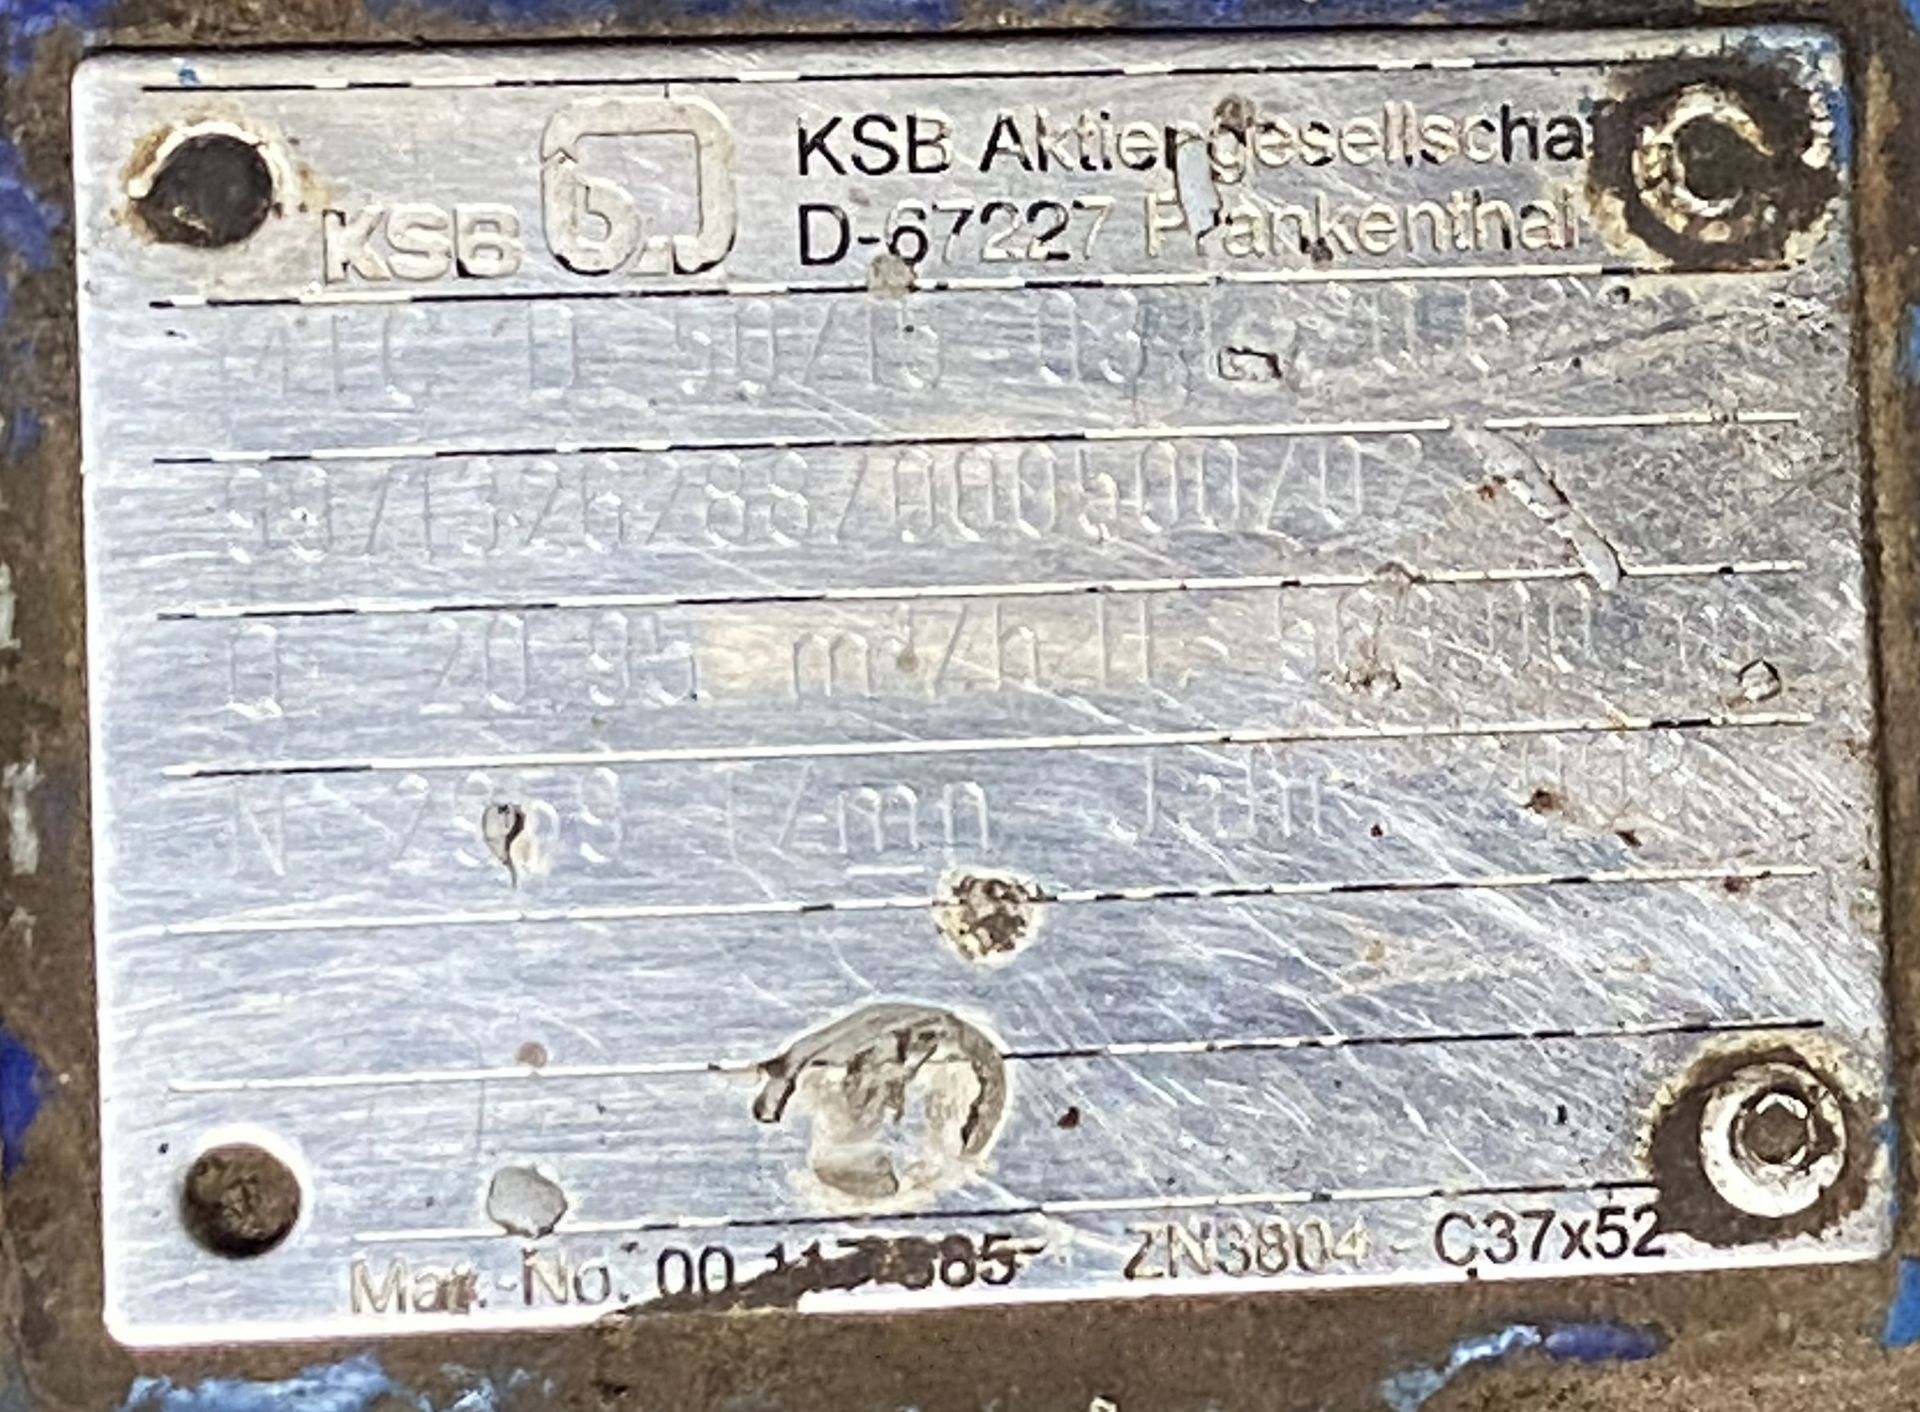 KSB MLC1 50/15-03 Pump, serial no. 9971326288/000500/02, 20.95m³/h, year of manufacture 2008, with - Bild 3 aus 3